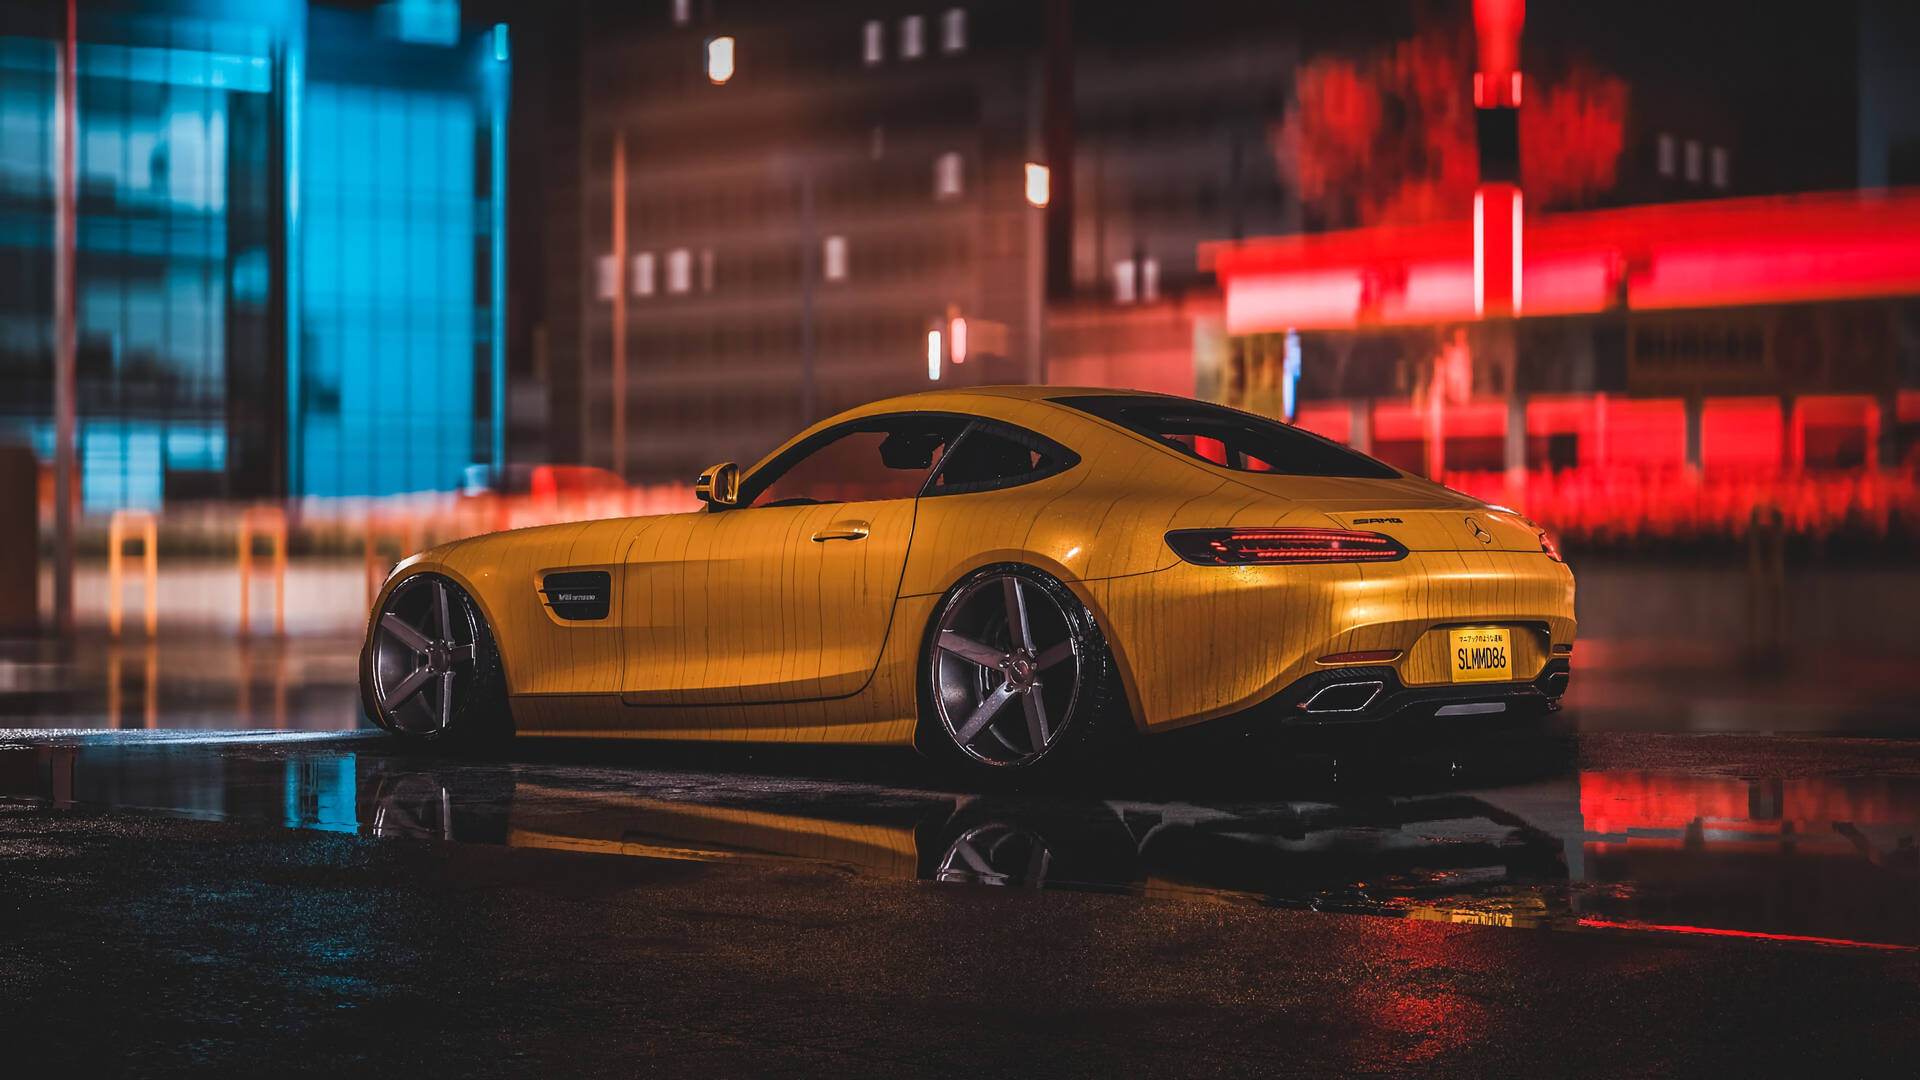 4k Mercedes Yellow In Street Background